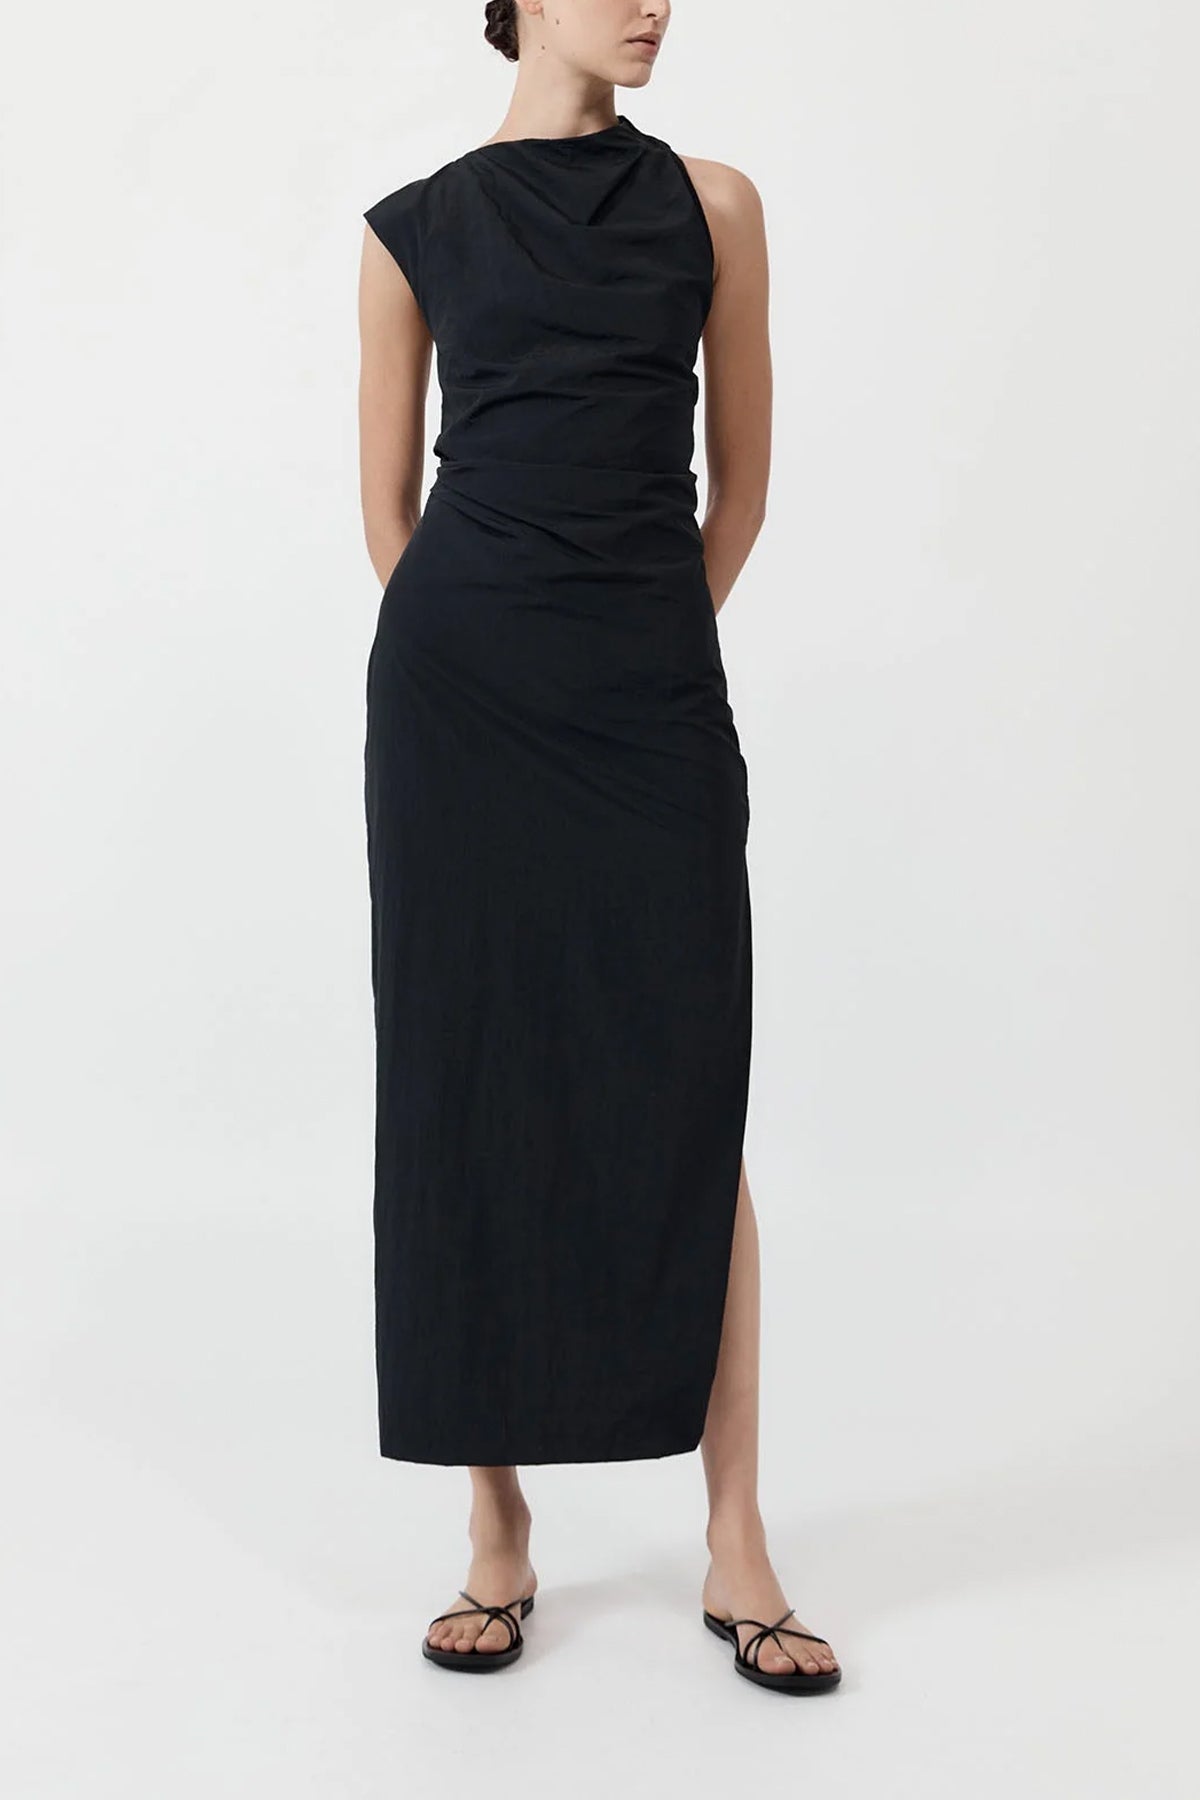 Asymm Tuck Dress in Black - shop-olivia.com